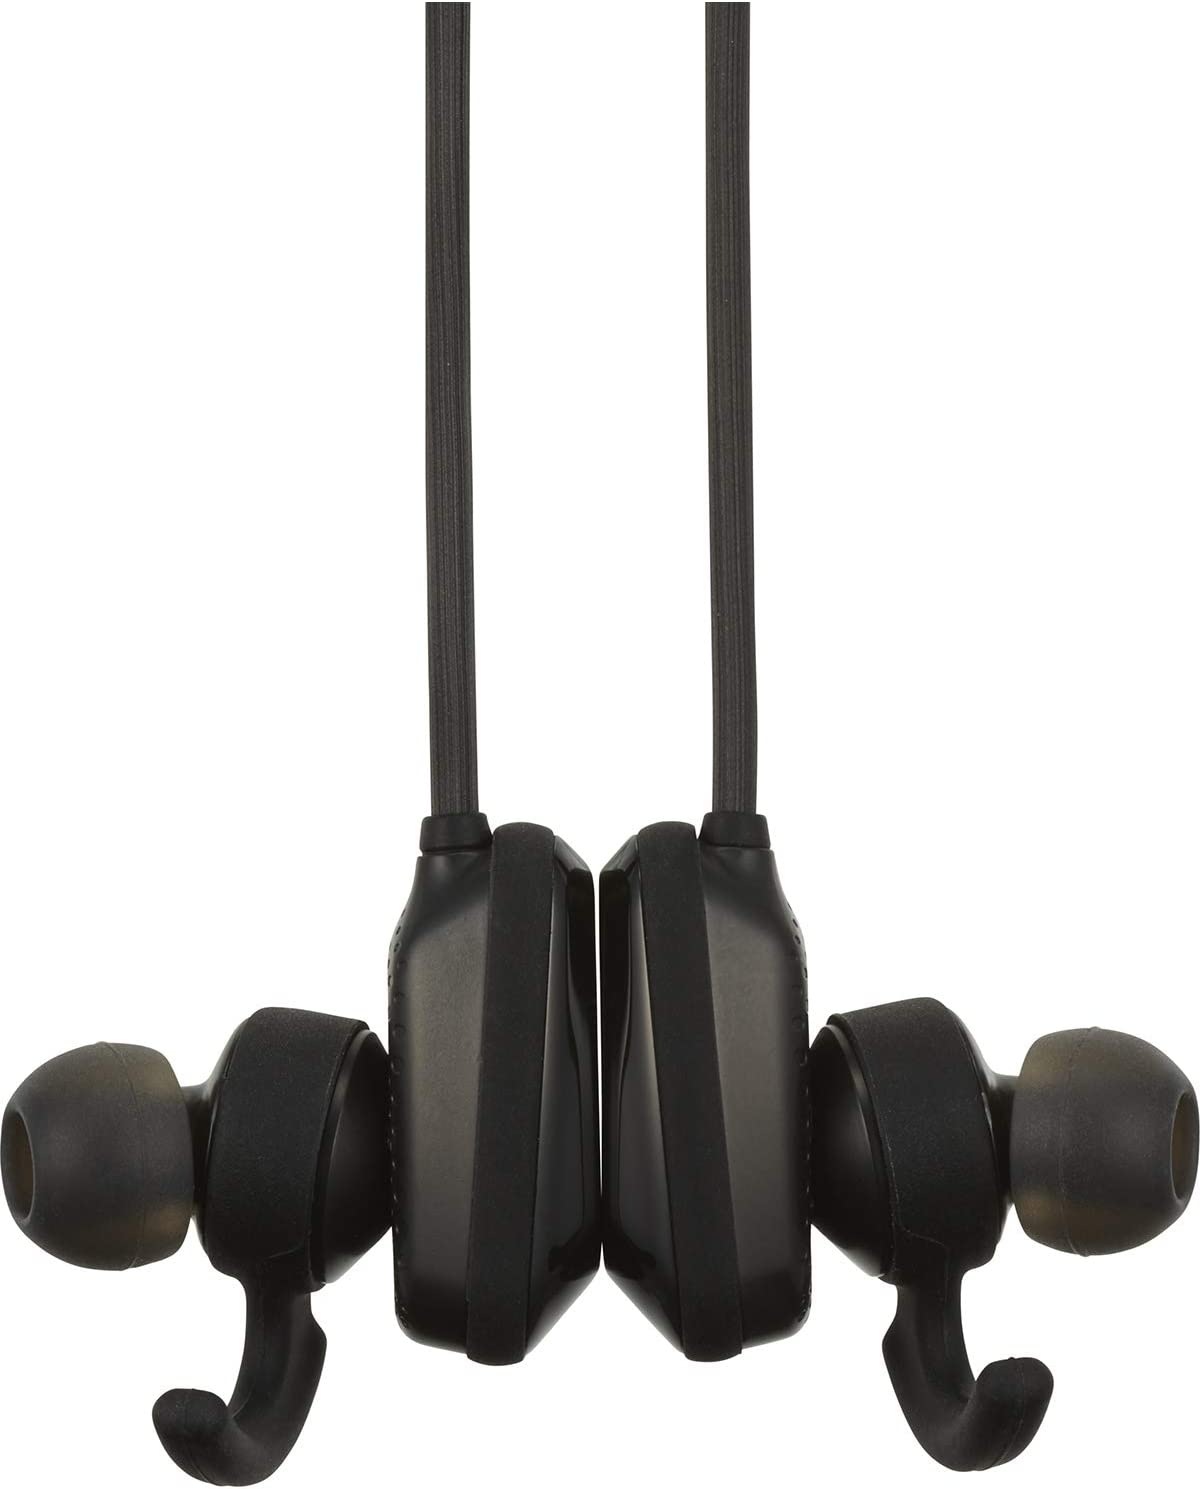 Auriculares inalámbricos deportivos Bluetooth SPC Ether Sport